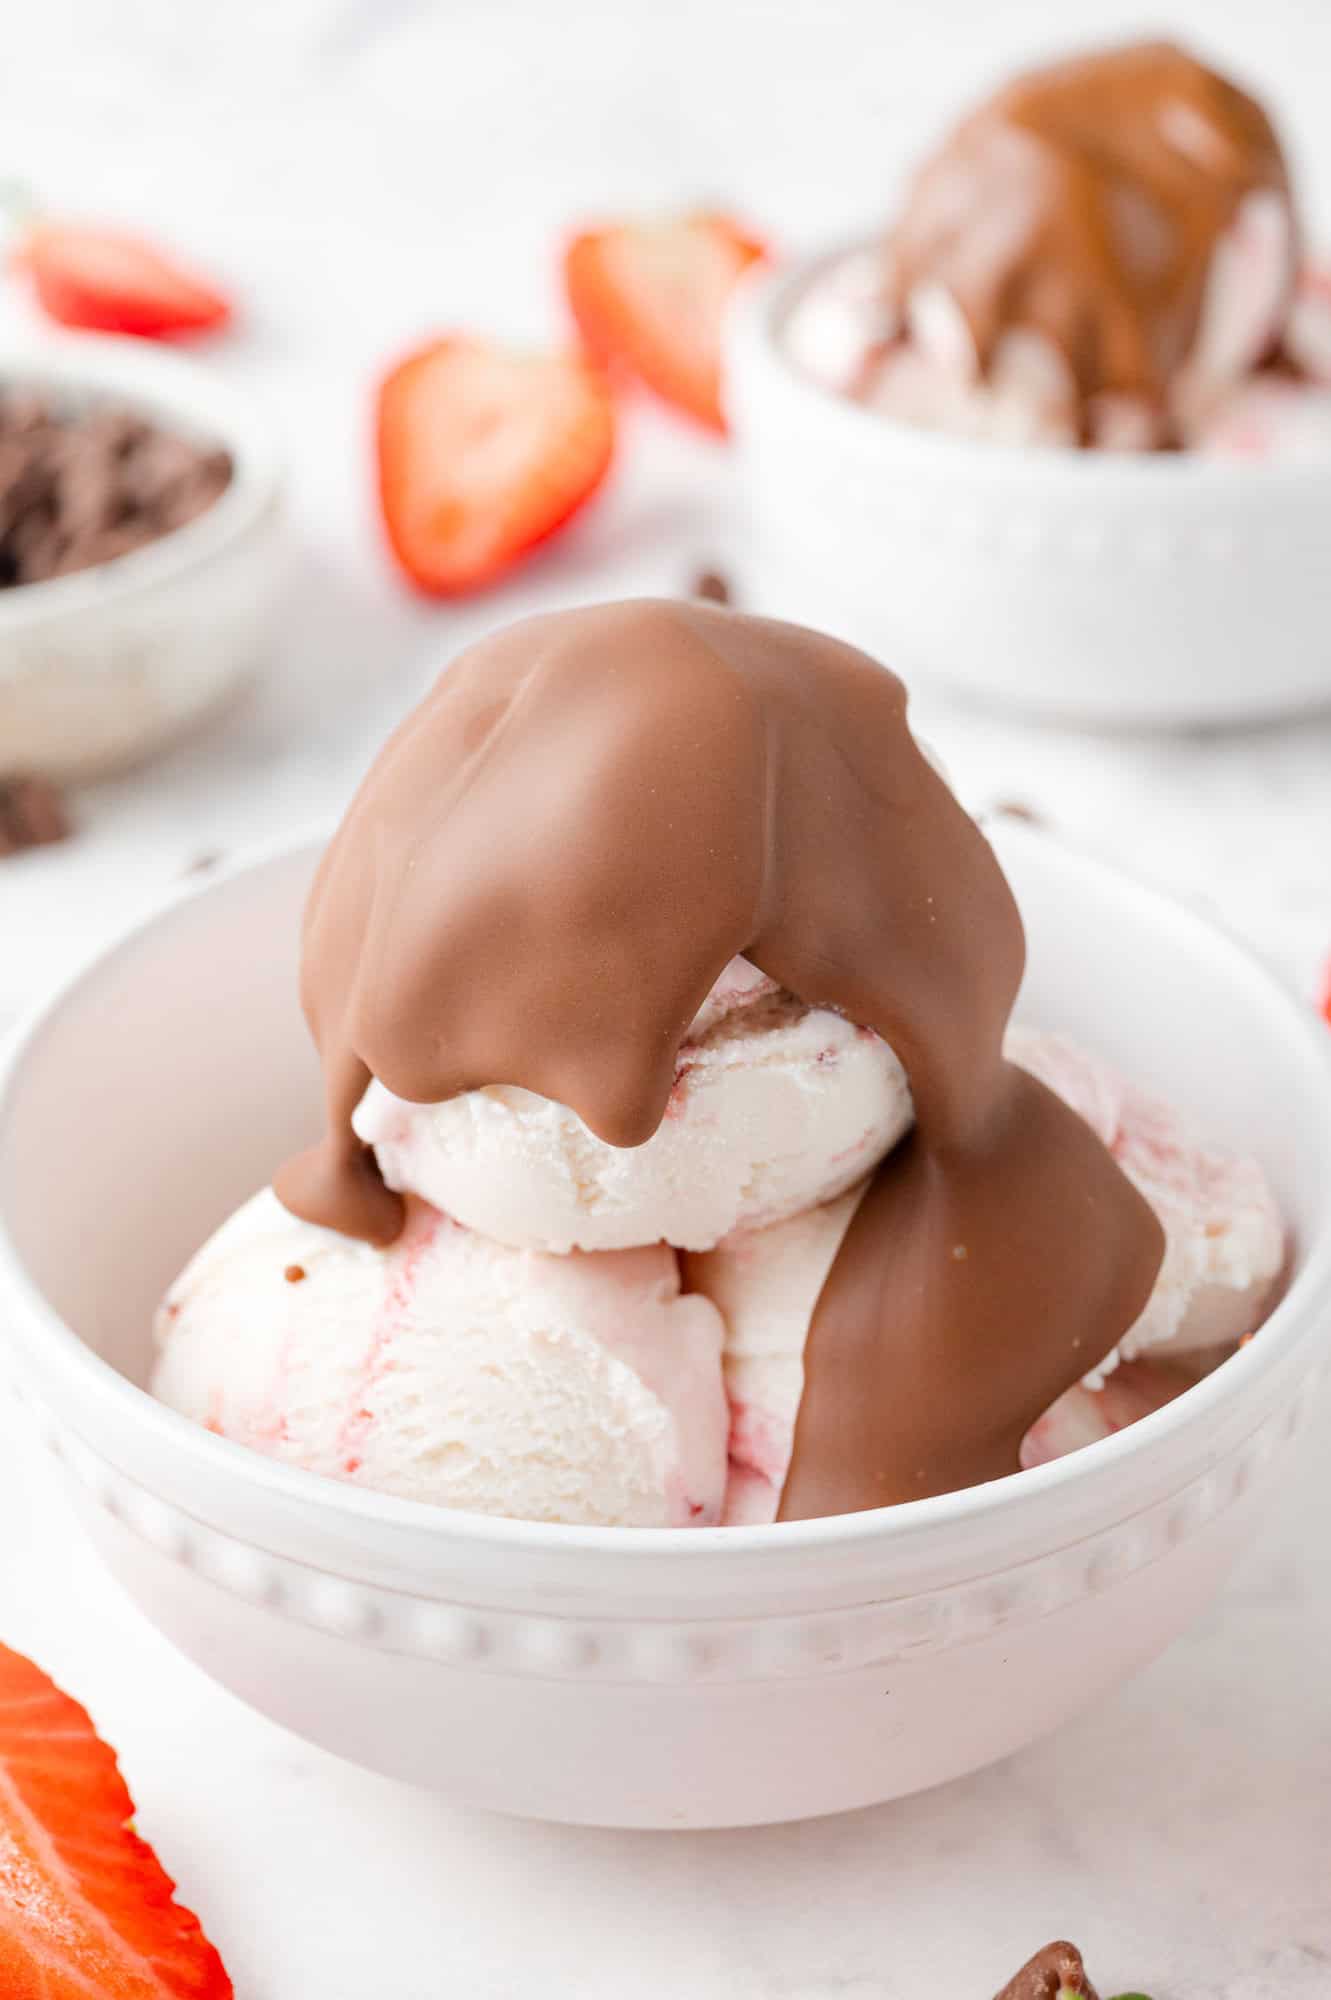 Chocolate magic shell on top of strawberry ice cream.